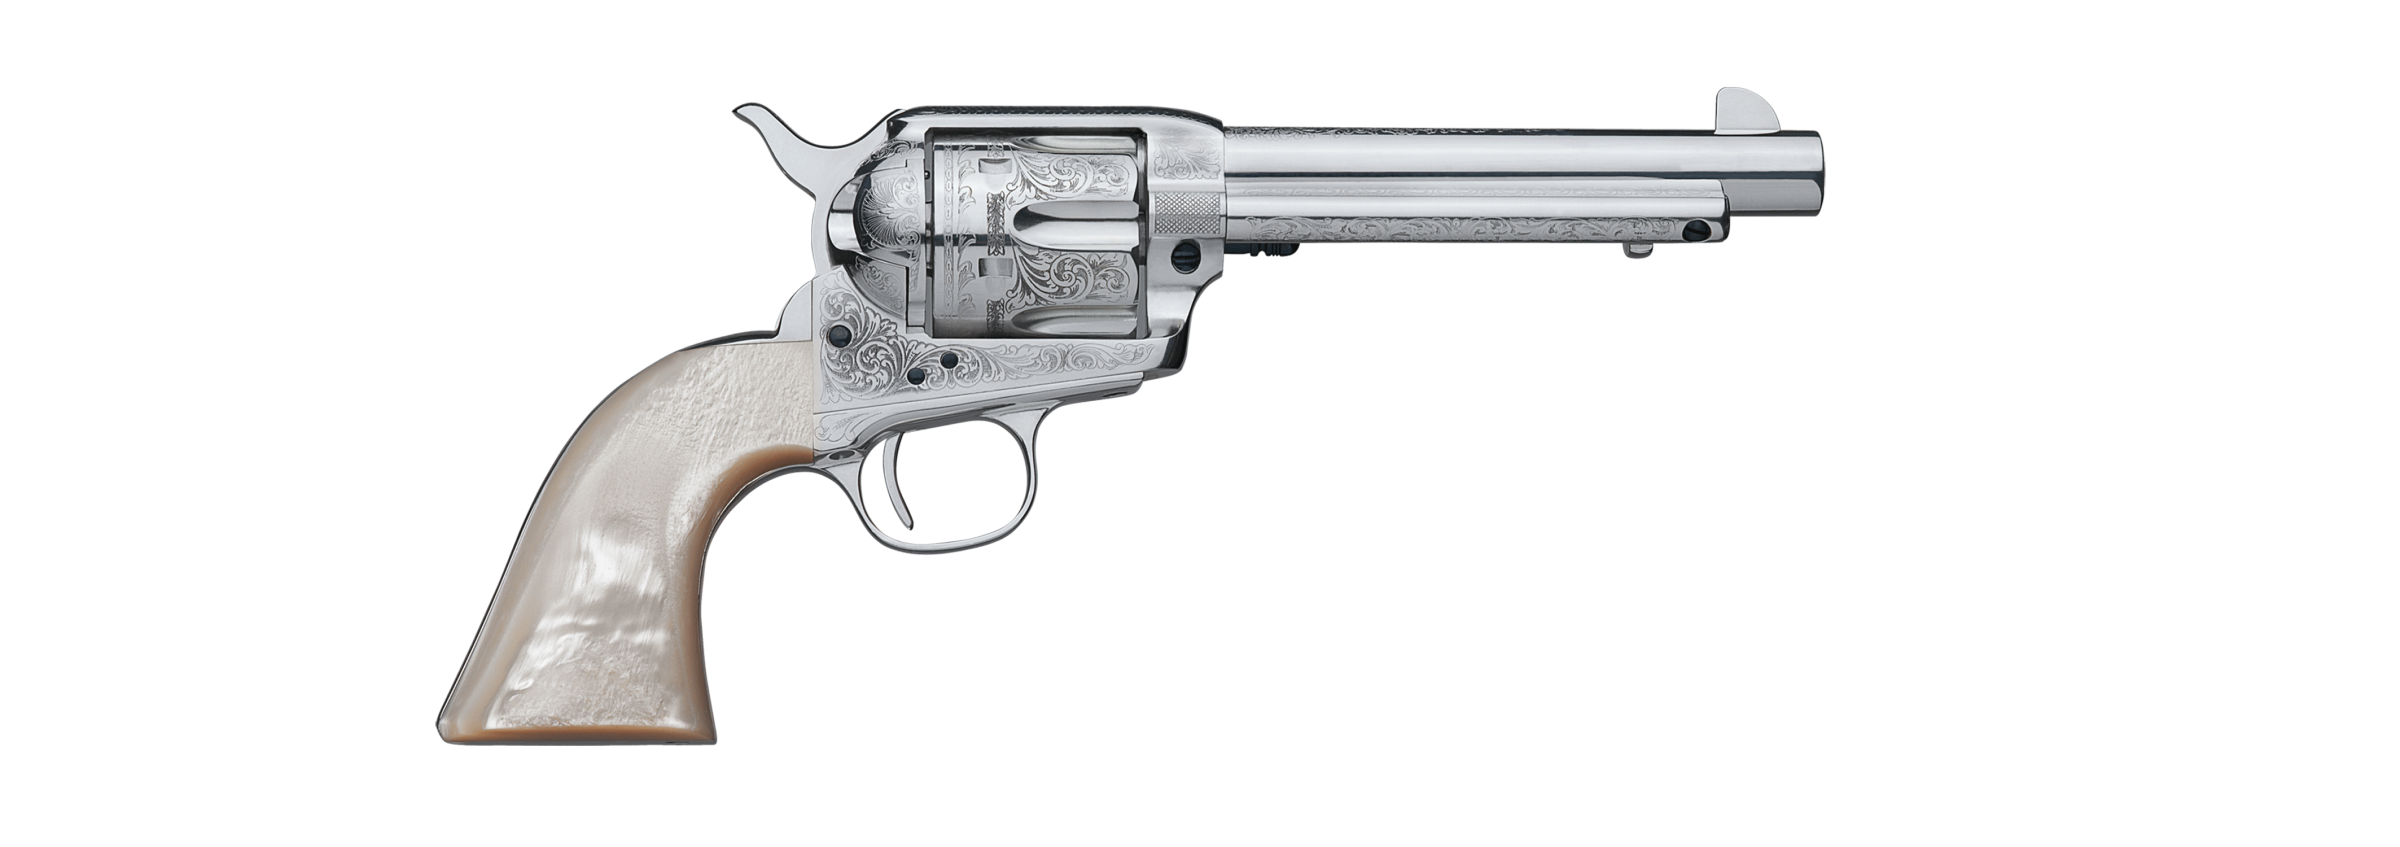 22lr revolver single action